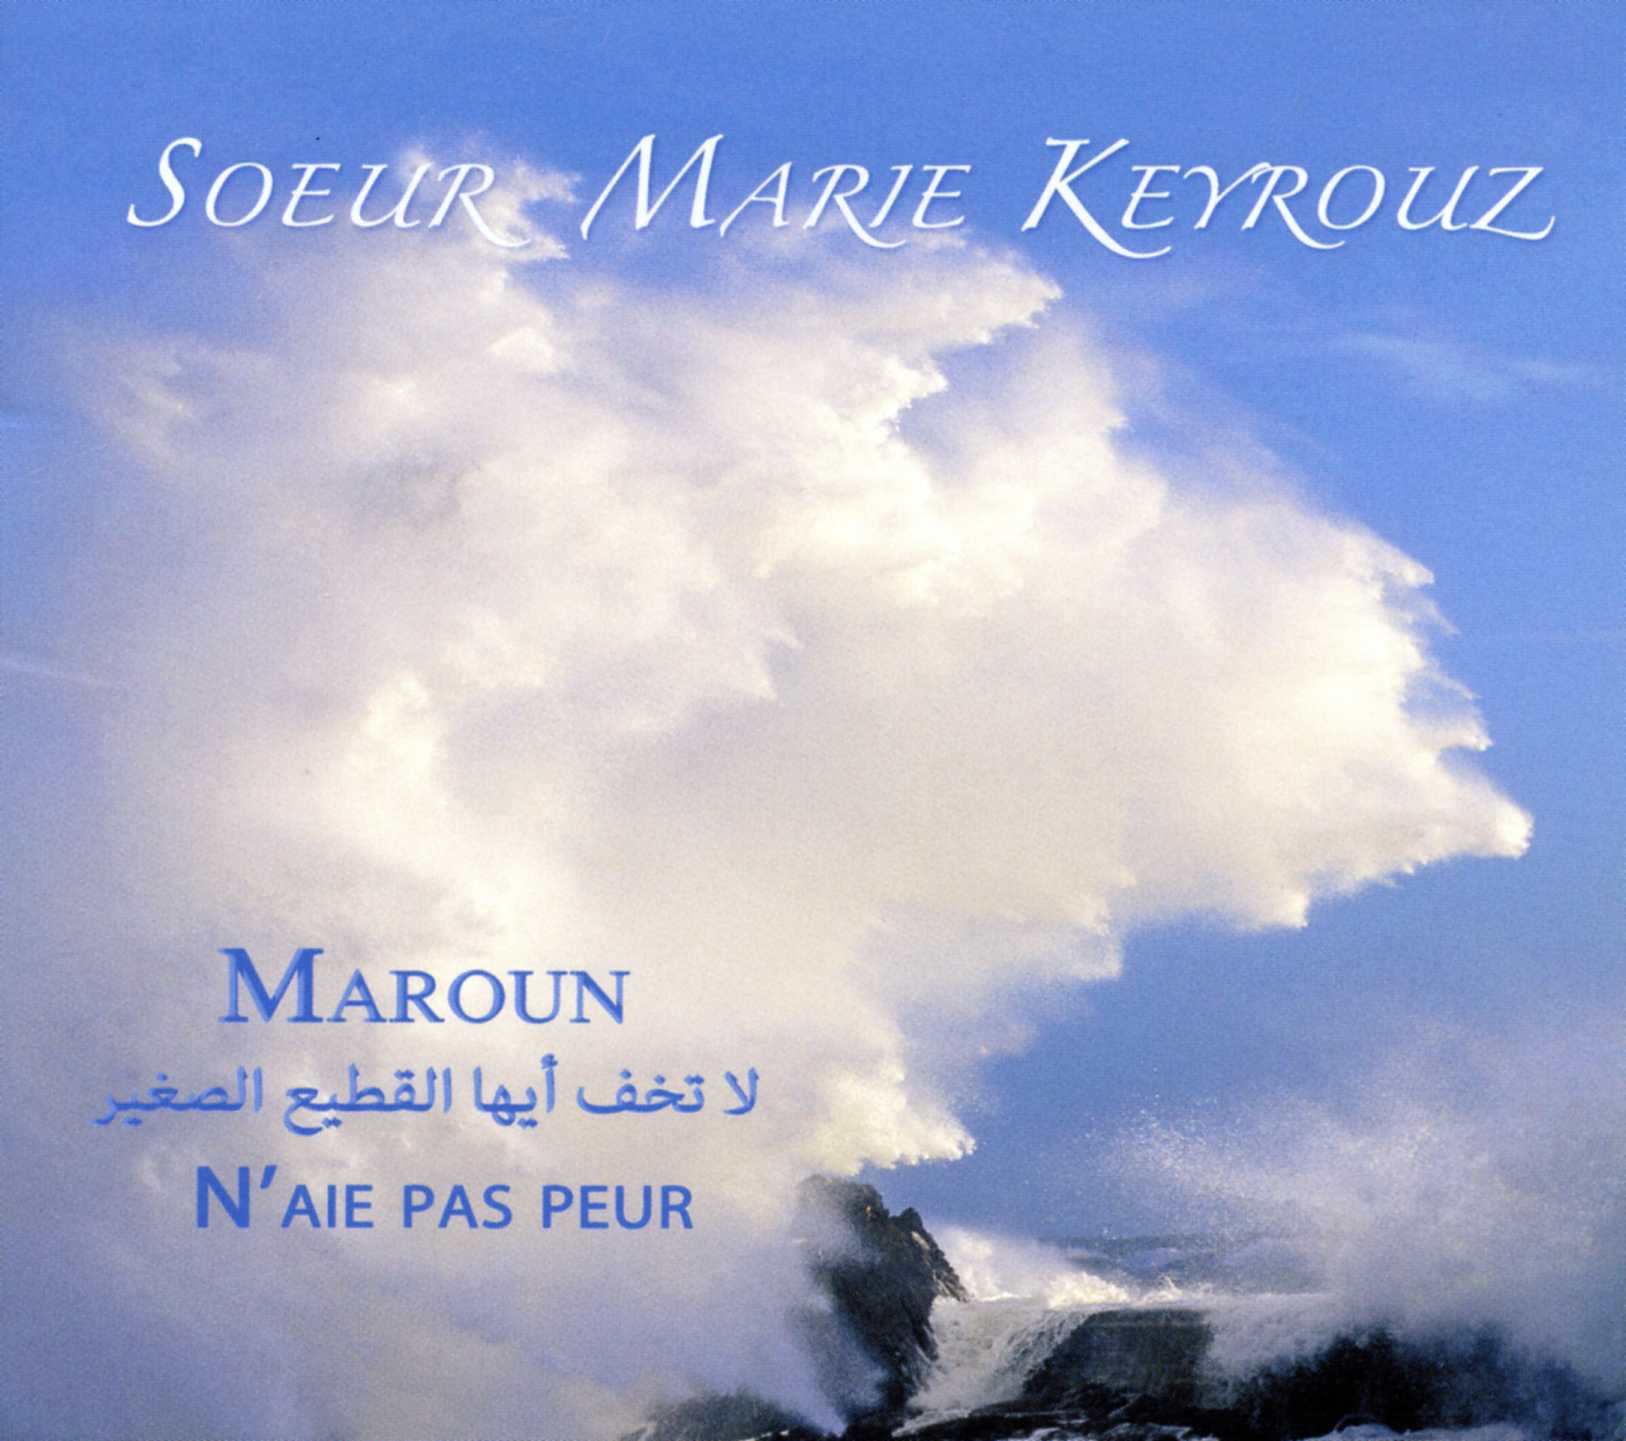 SMK-Maroun CD